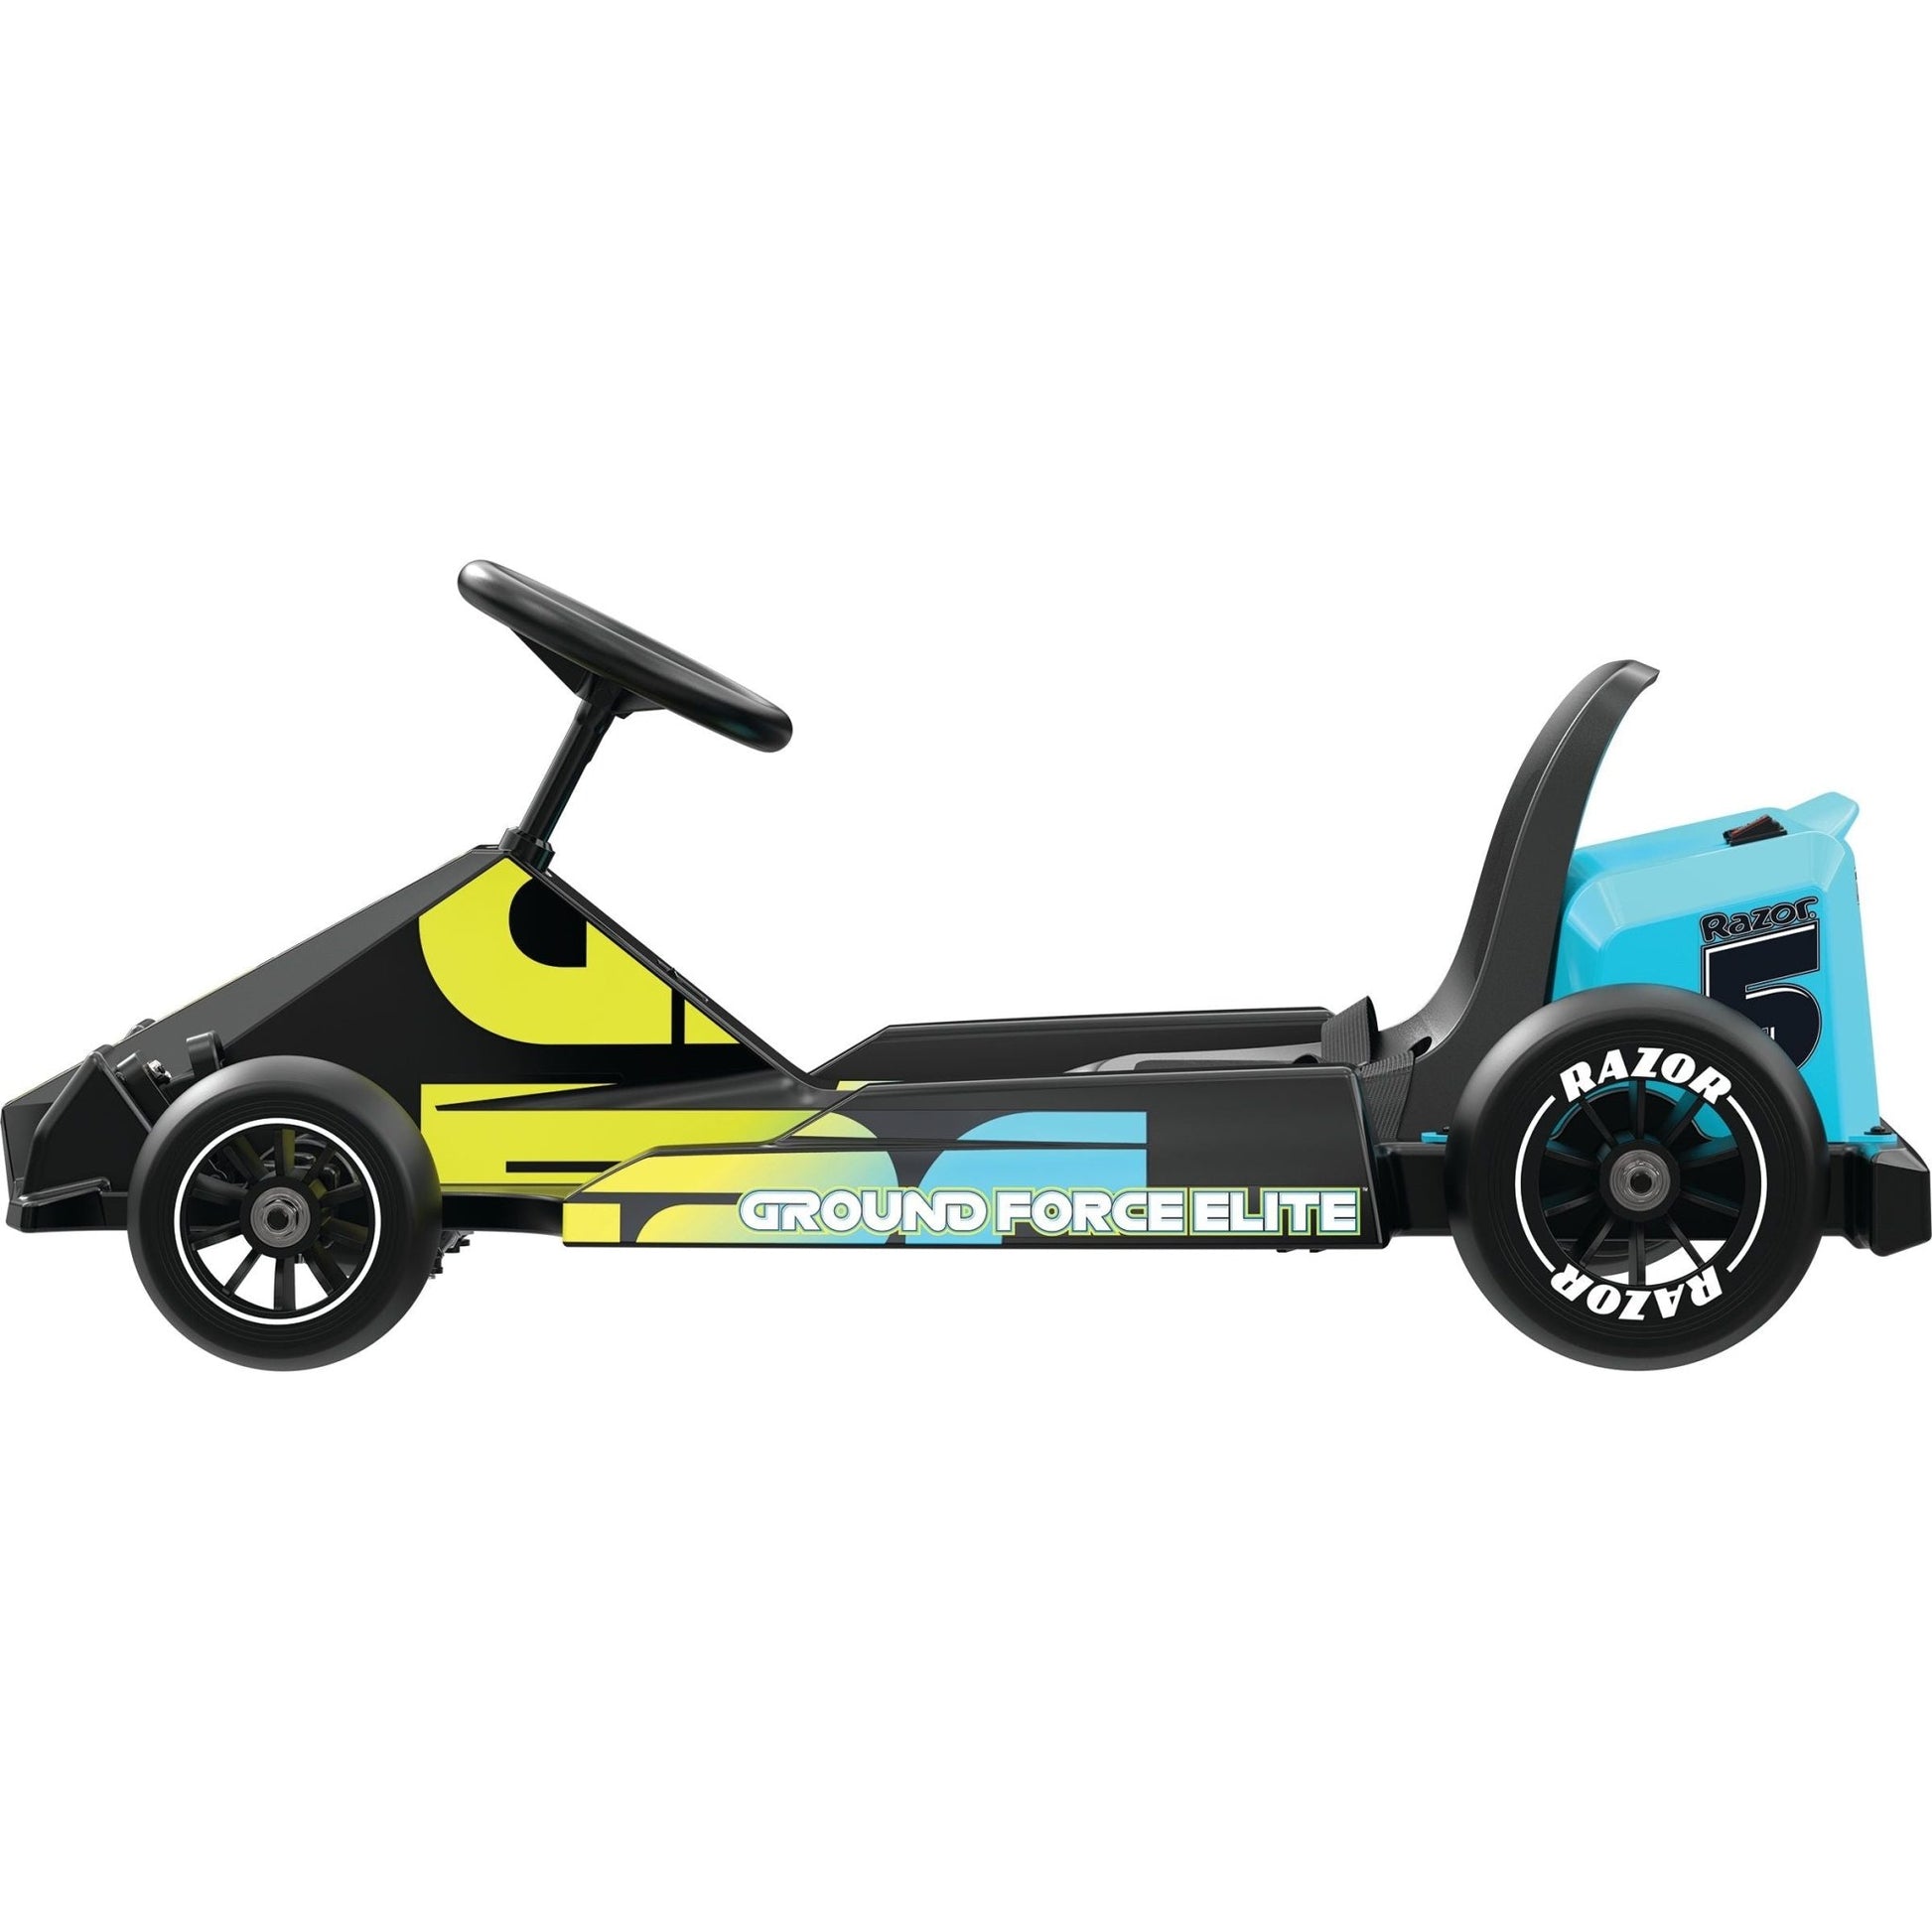 Razor Ground Force Elite Go Kart - The Online Toy Shop - Electric Kart - 14